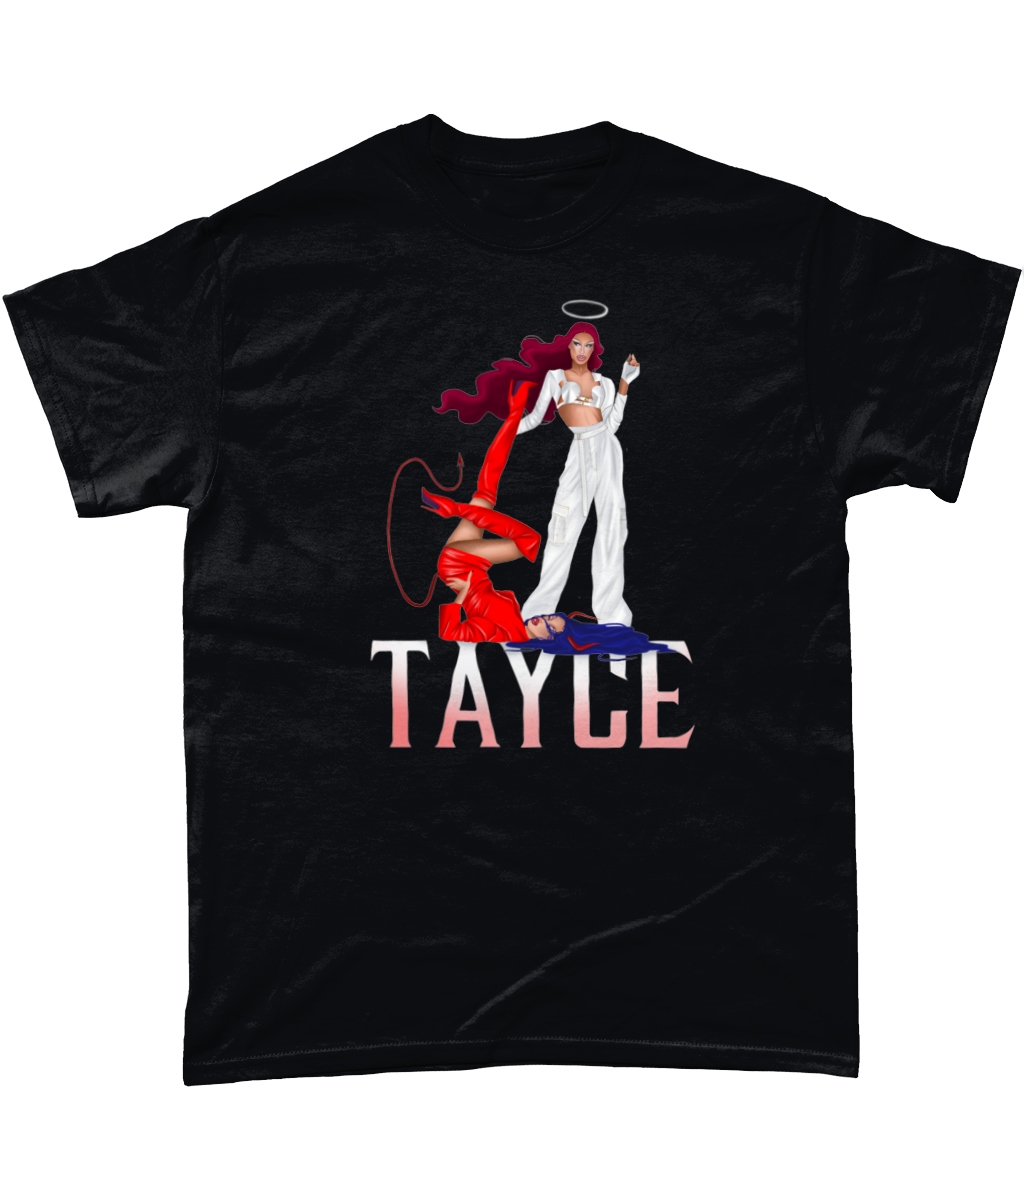 TAYCE - Official Merchandise - Black T-Shirt